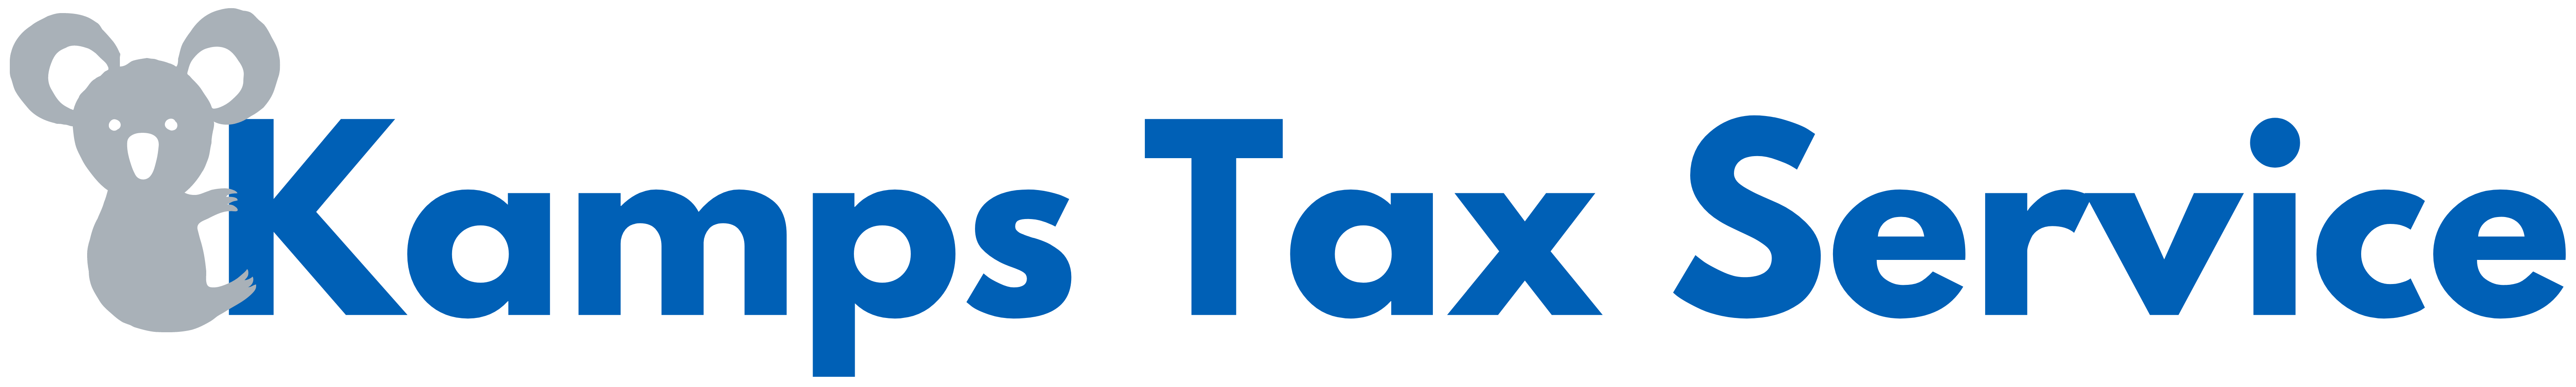 Kamps Tax Service logo